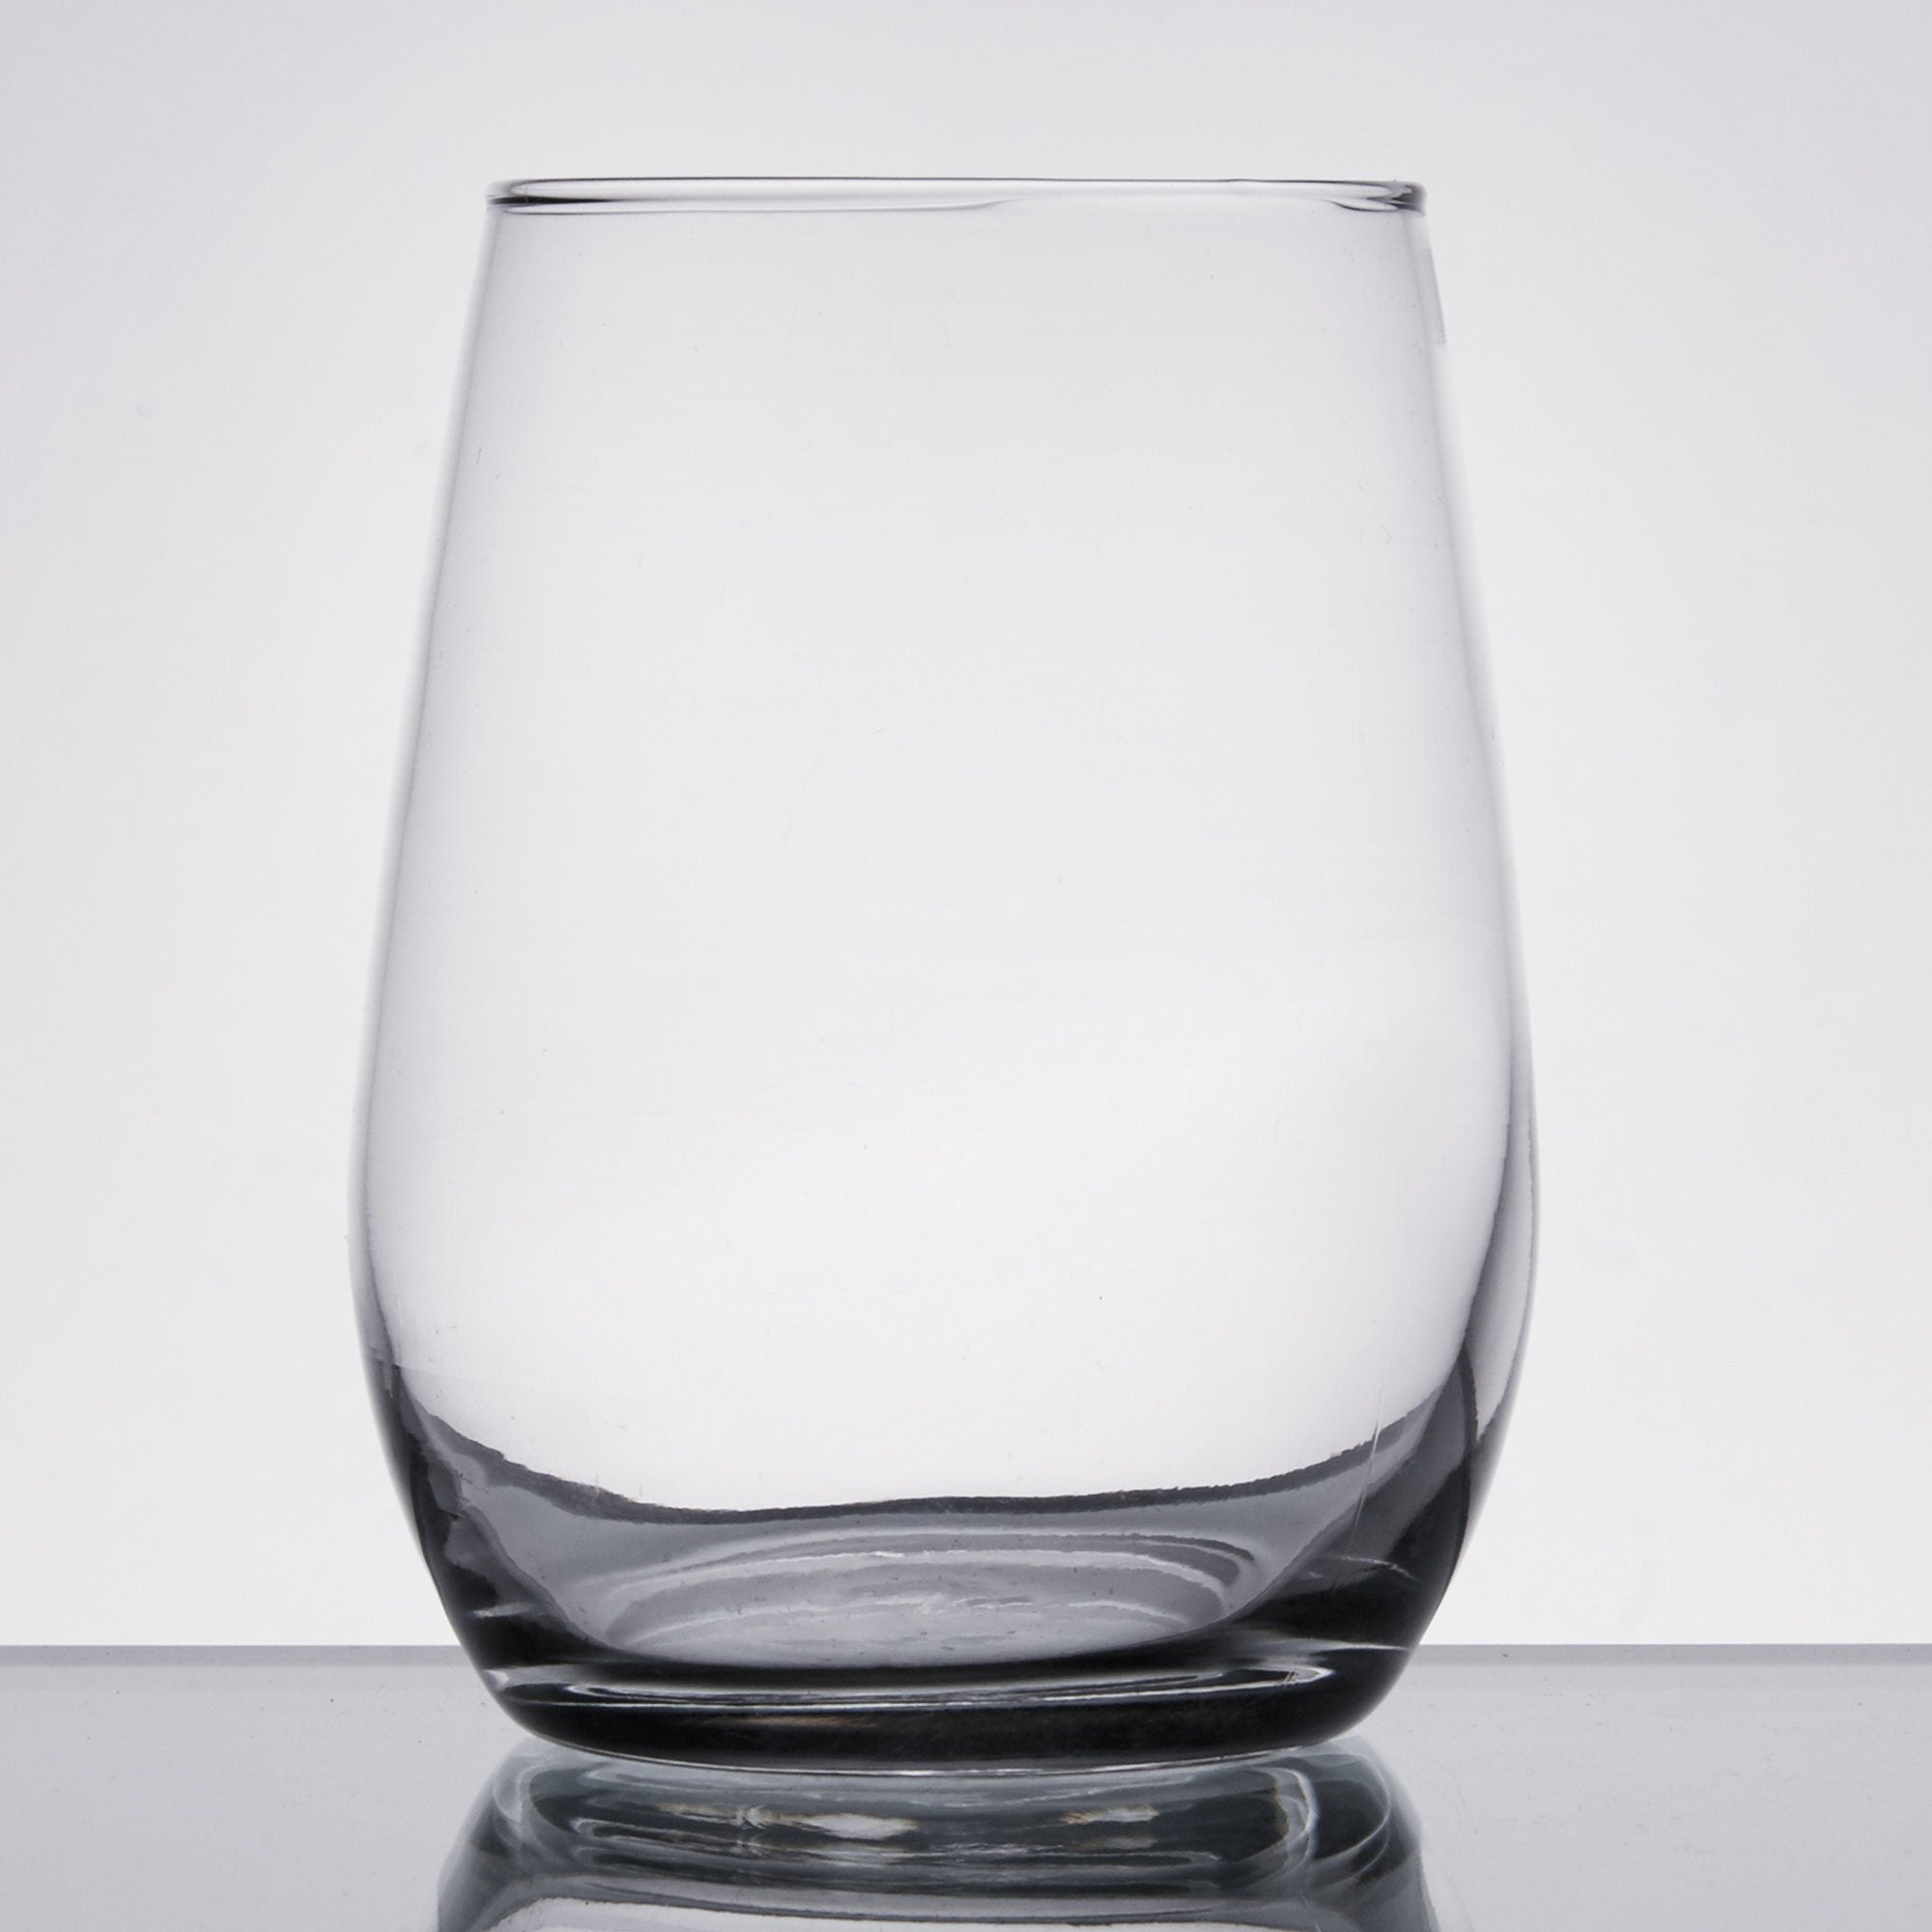 Customized Libbey Tall Wine Glasses (16 Oz.), Drinkware & Barware